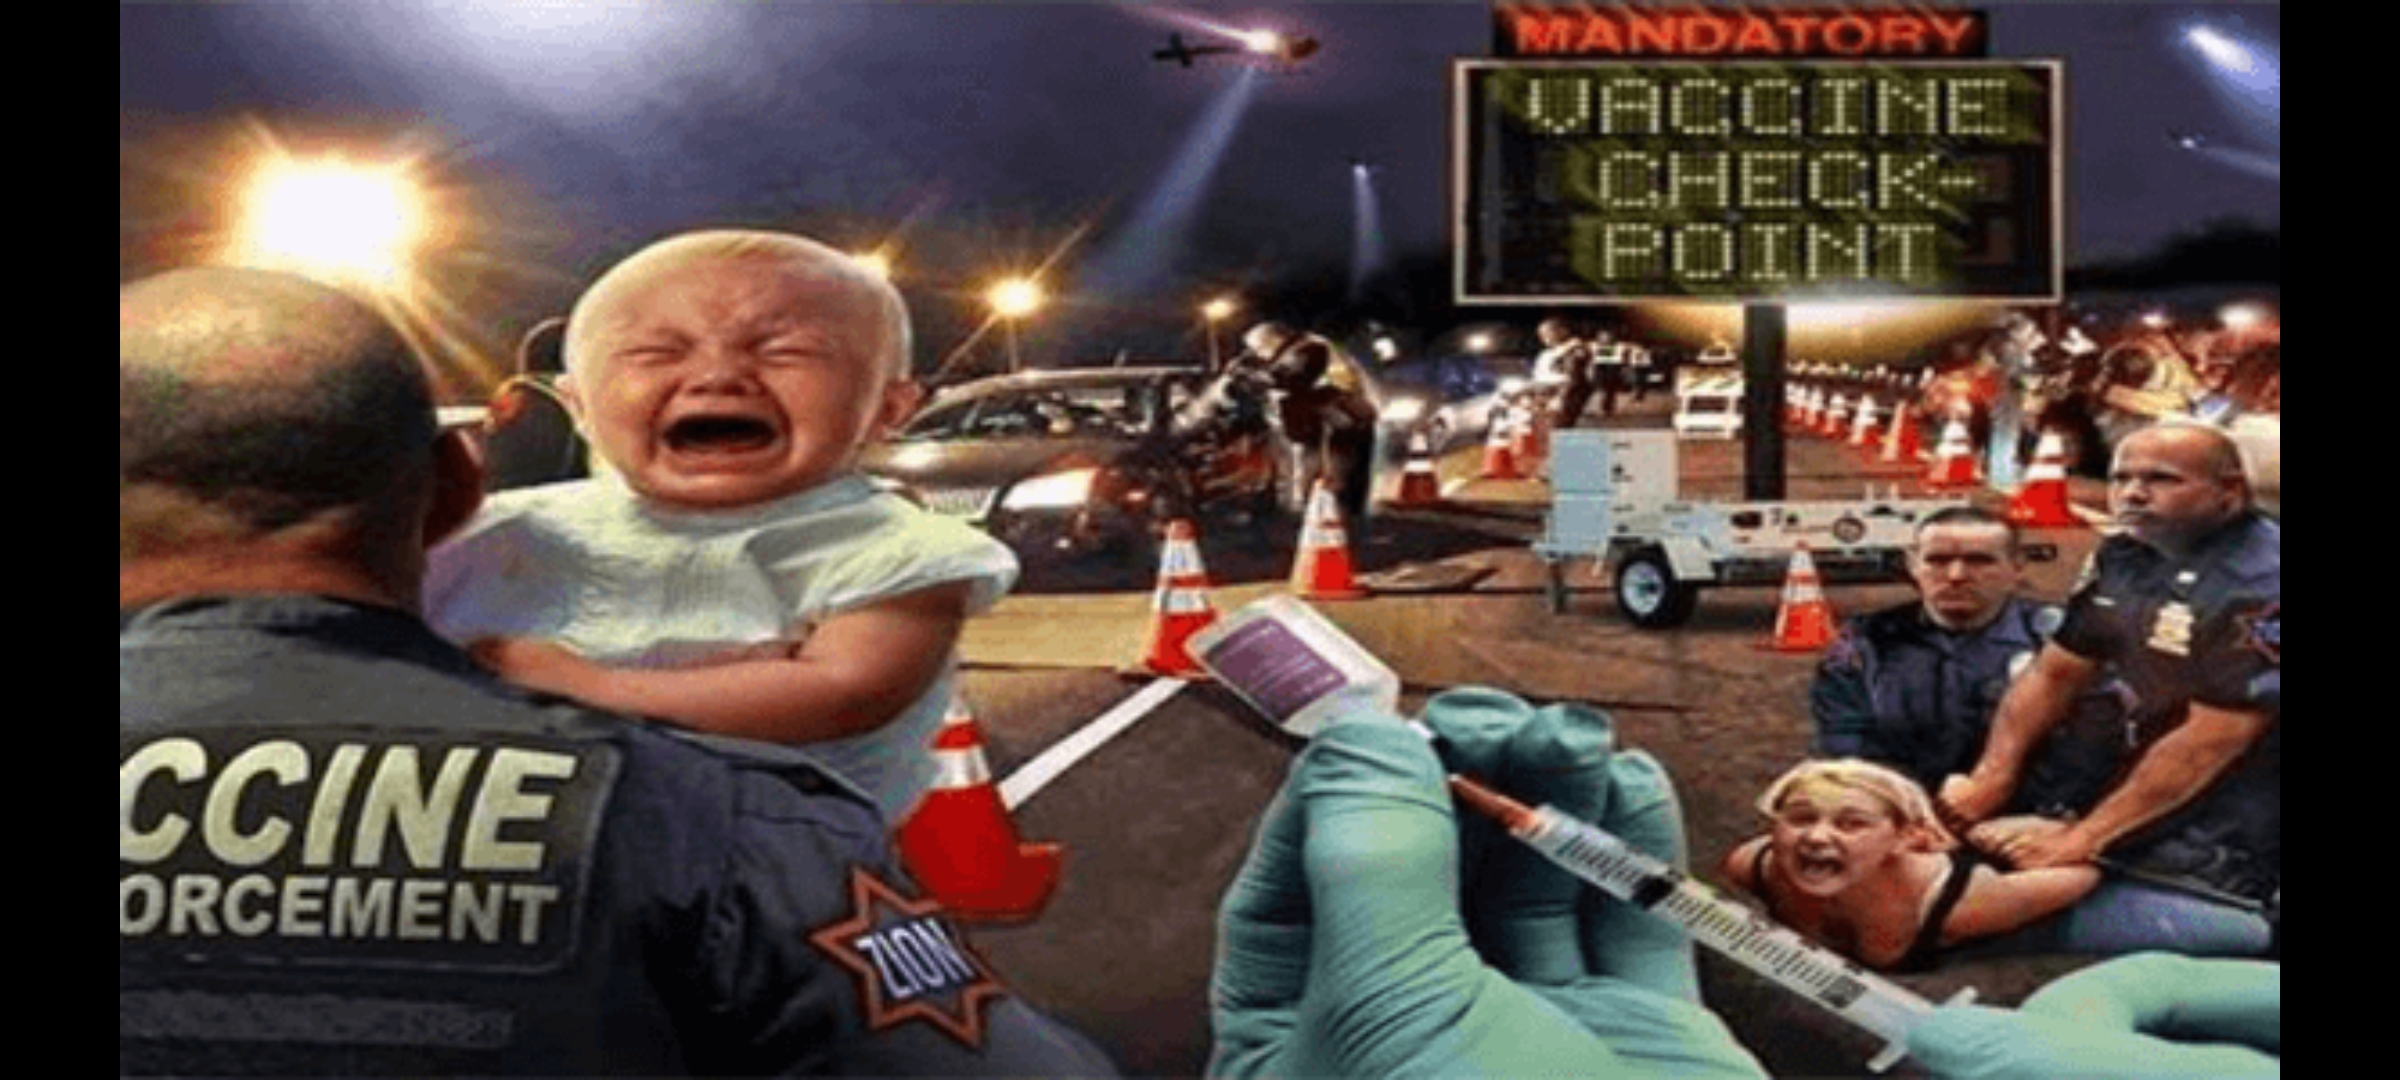 ᎠᎬᏴϴᎡᎪᎻ ͲᎪᏙᎪᎡᎬՏ 👉❌ VACCINES - Forced Vaccinations | 15/05/2015 | 'כתוביות אוטו